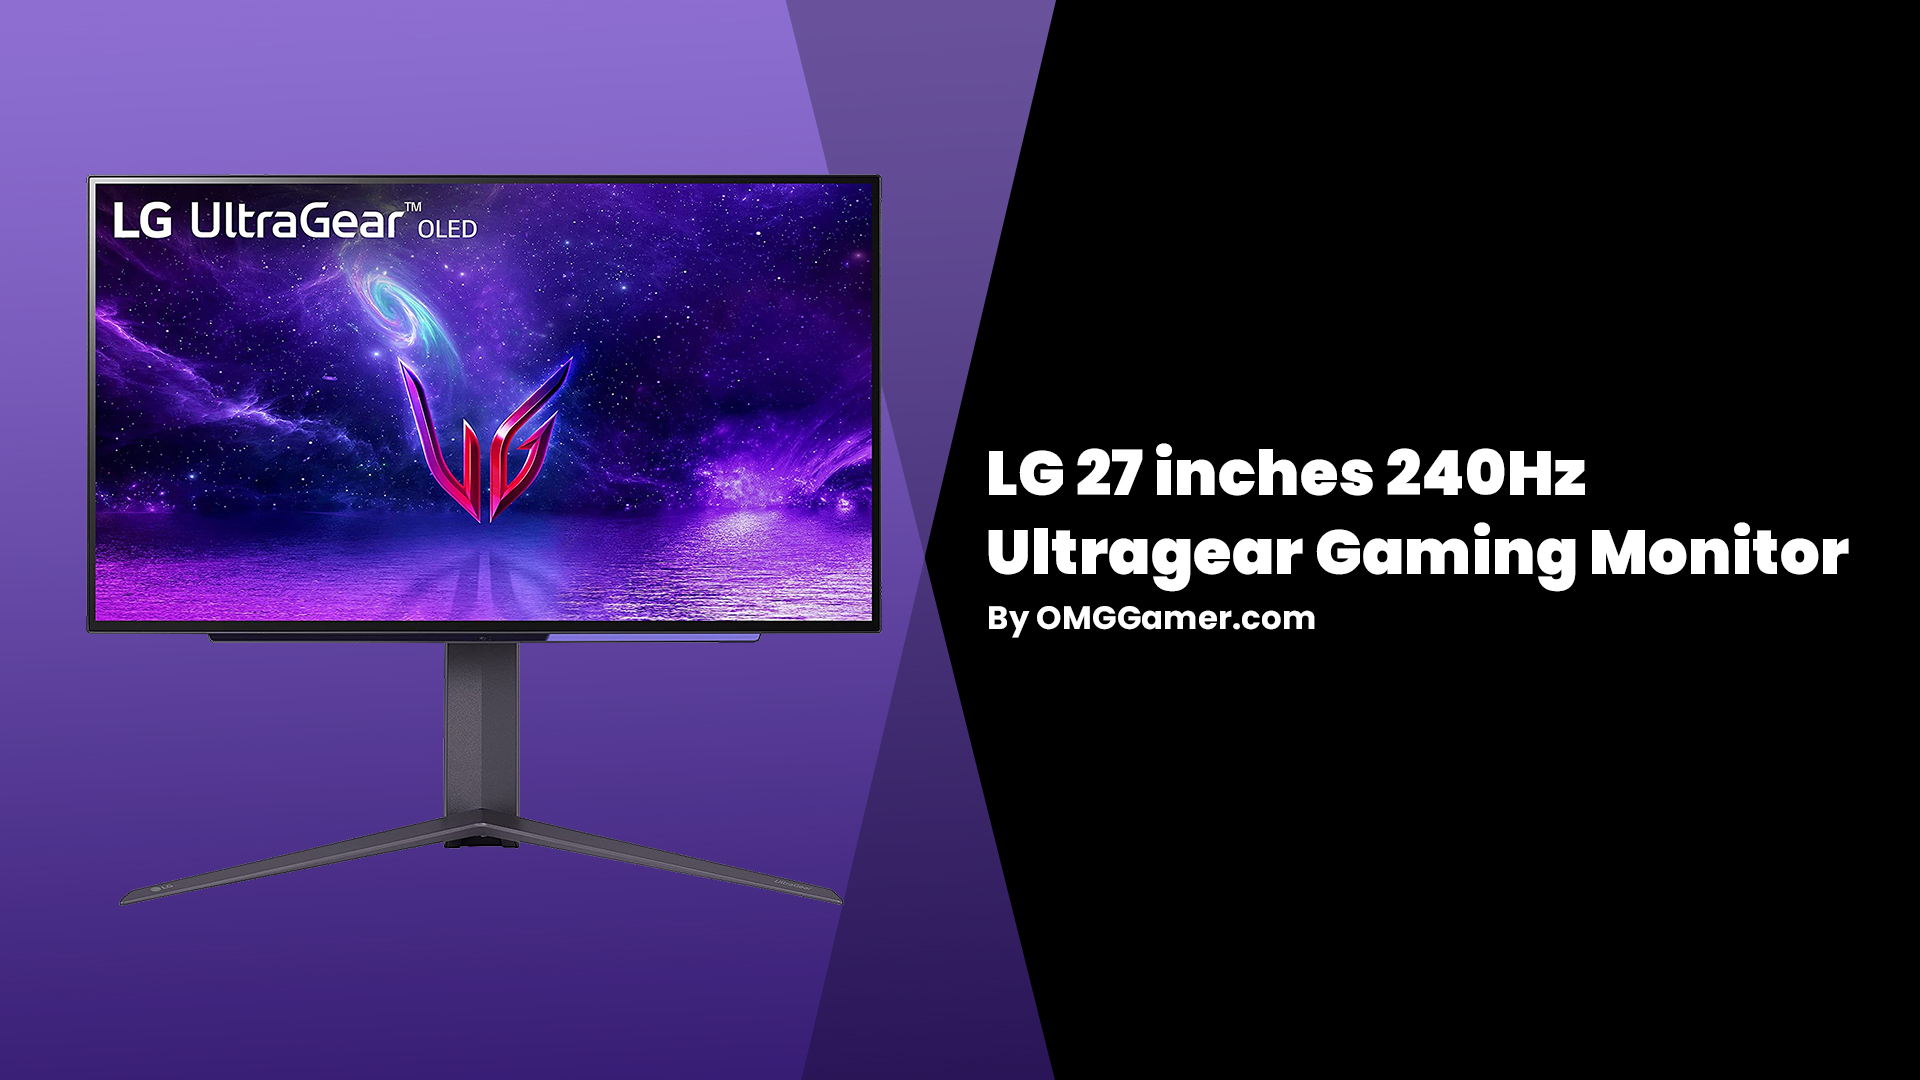 LG 27 inches 240Hz Ultragear Gaming Monitor